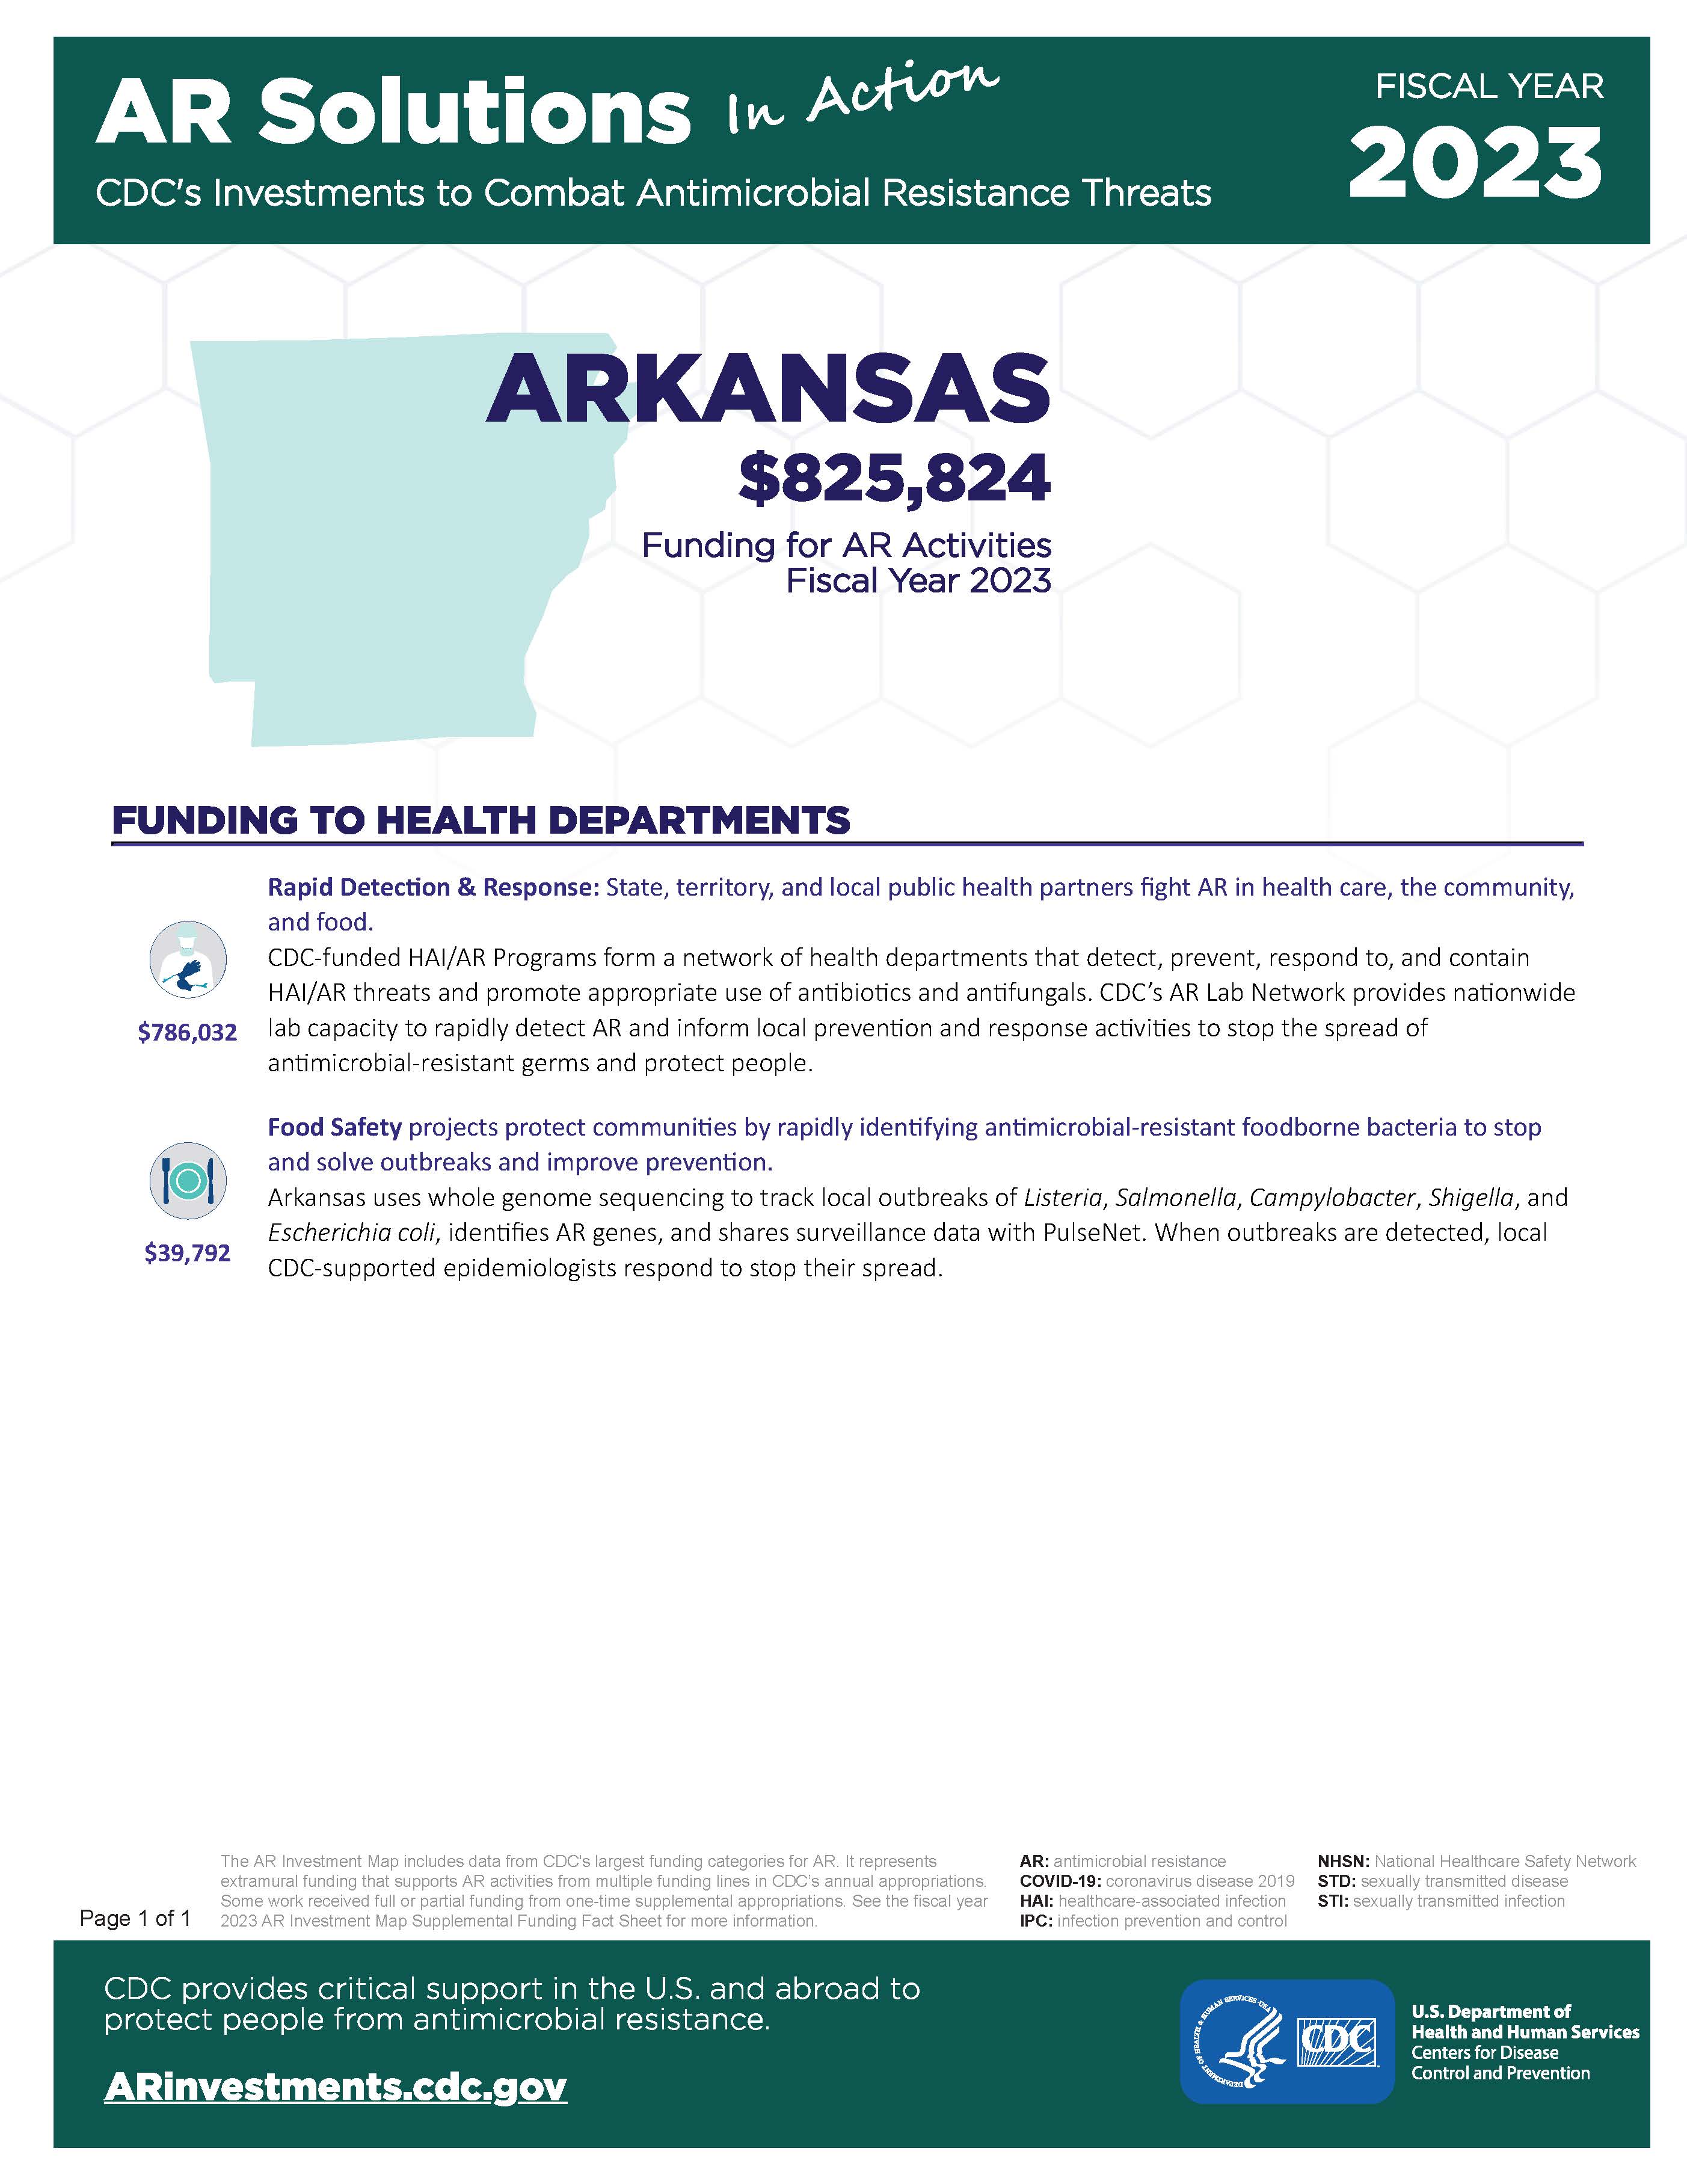 View Factsheet for Arkansas